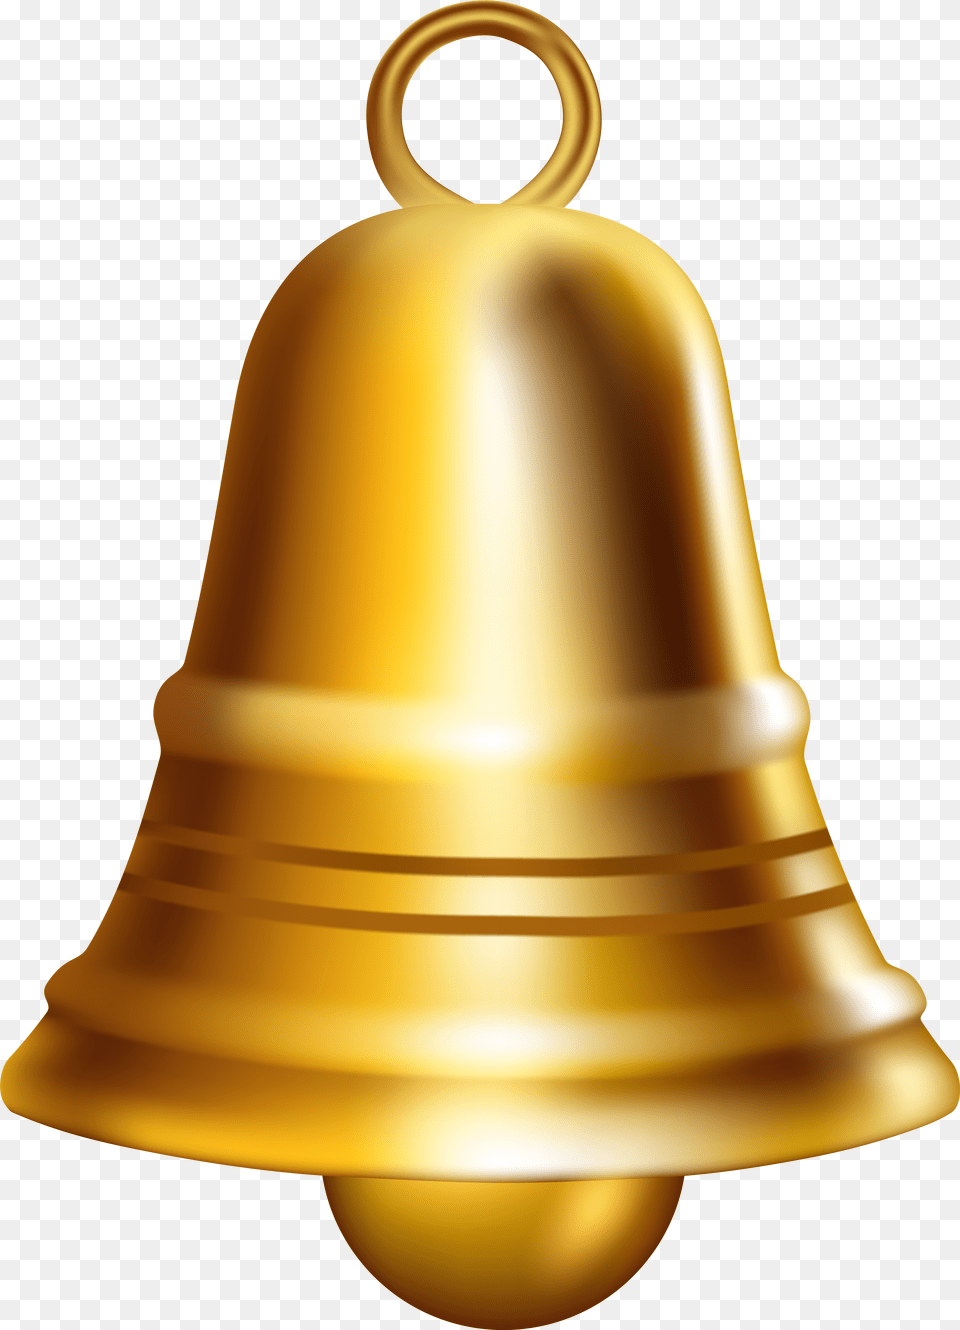 Golden Bell Clip Art Bells Png Image